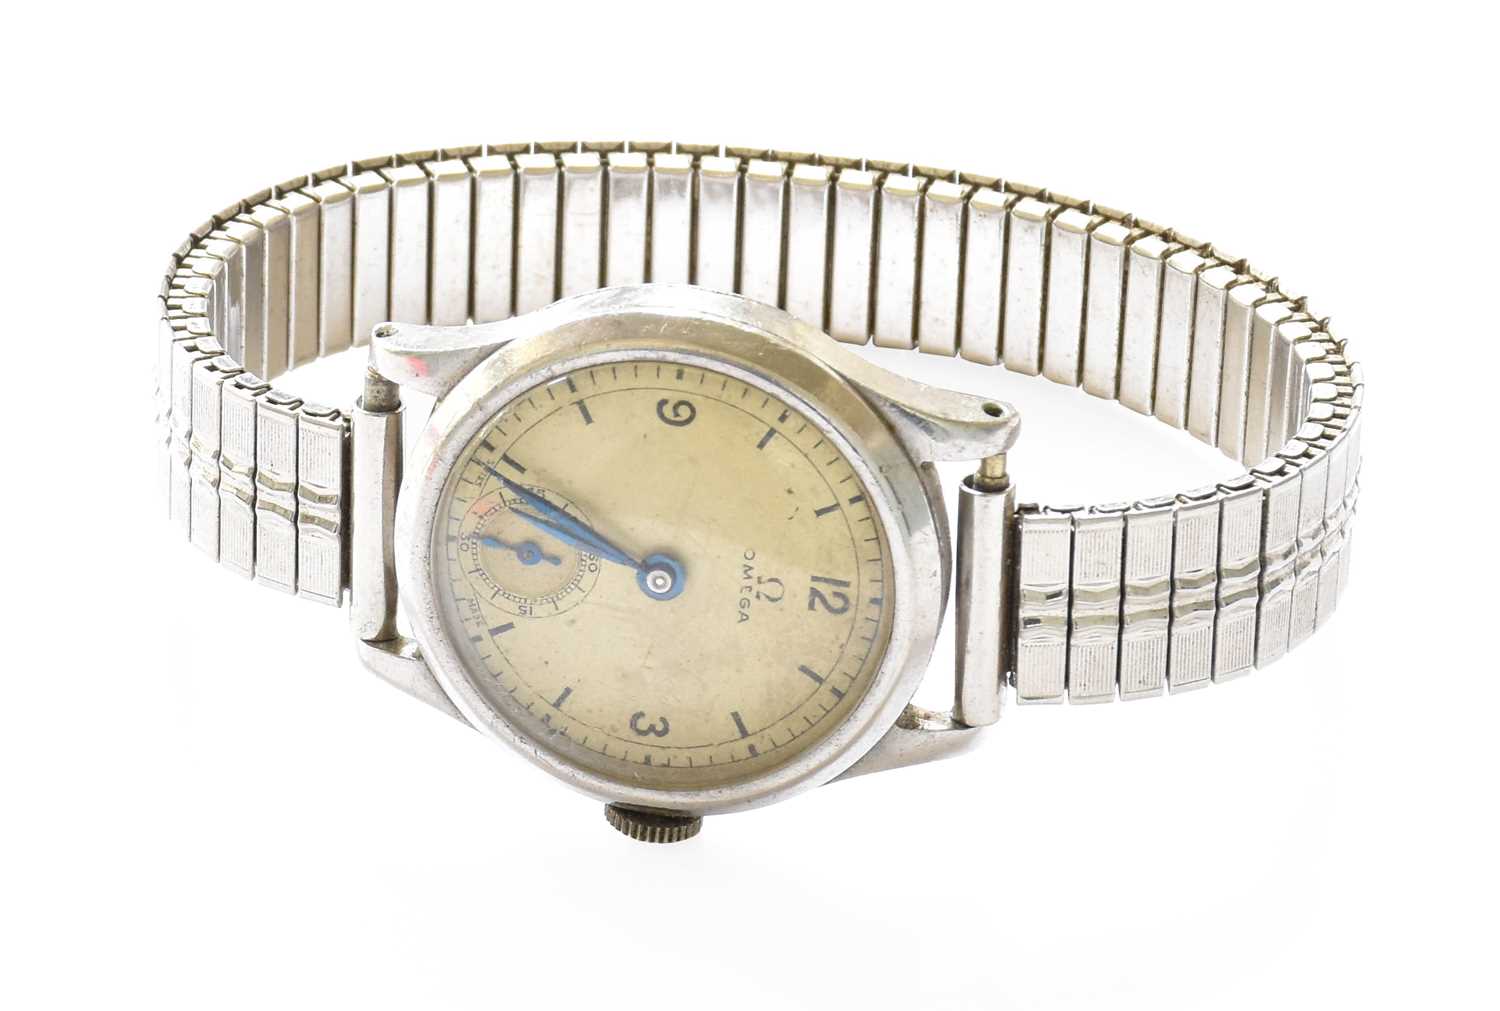 Lot 299 - A Steel Omega Wristwatch, circa 1940